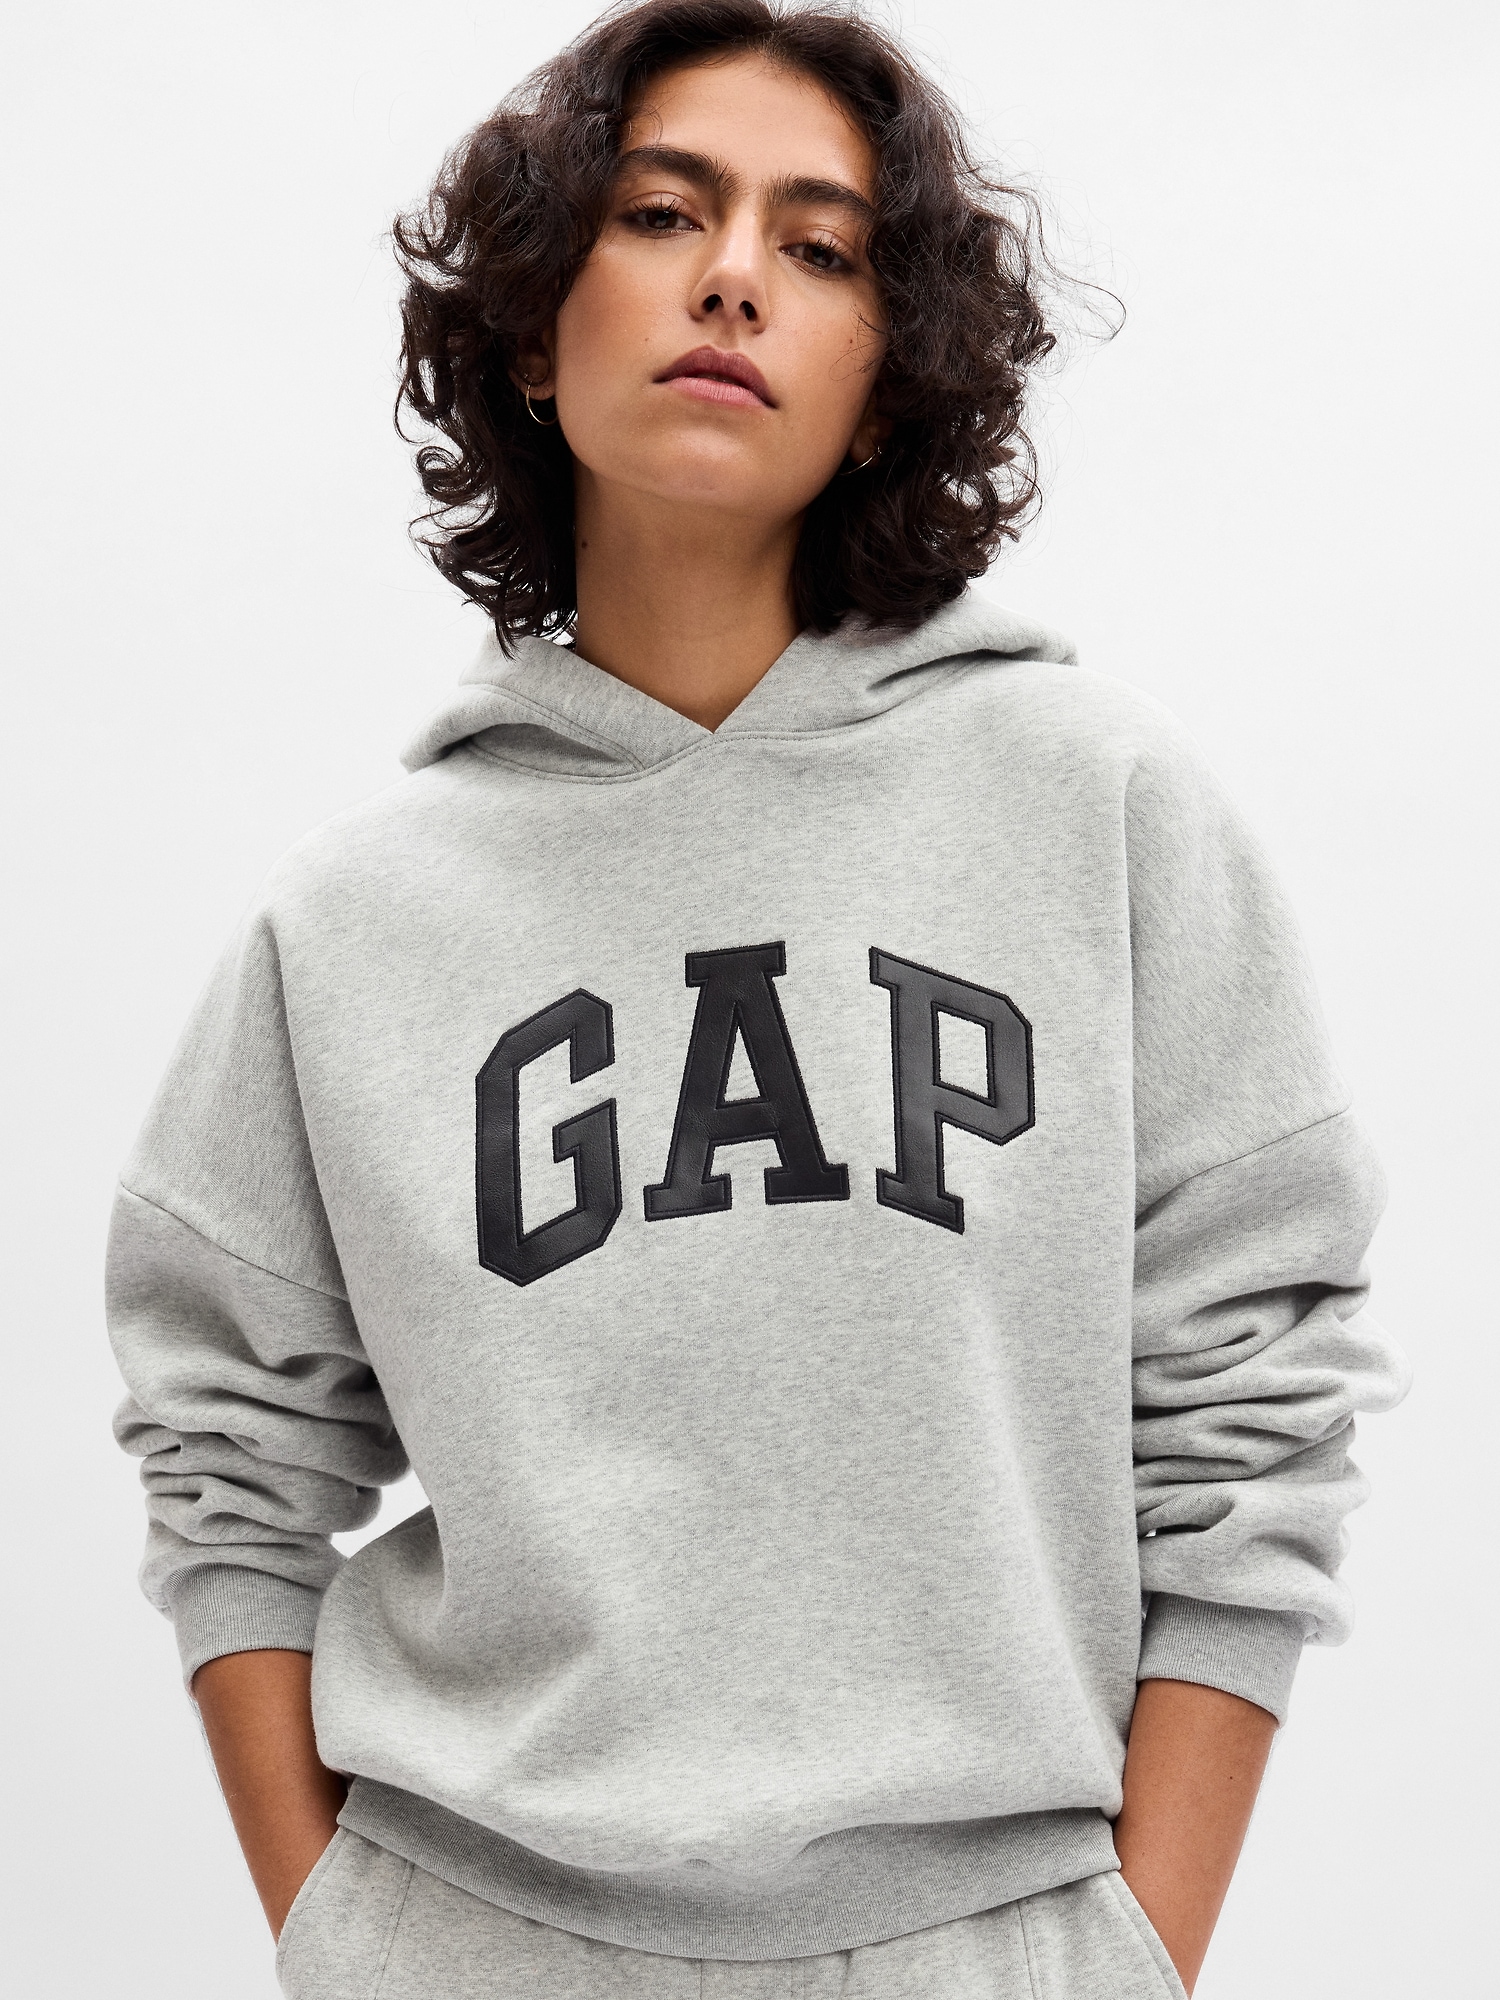 Women's Vintage Soft Hoodie by Gap Gray Petite Size S